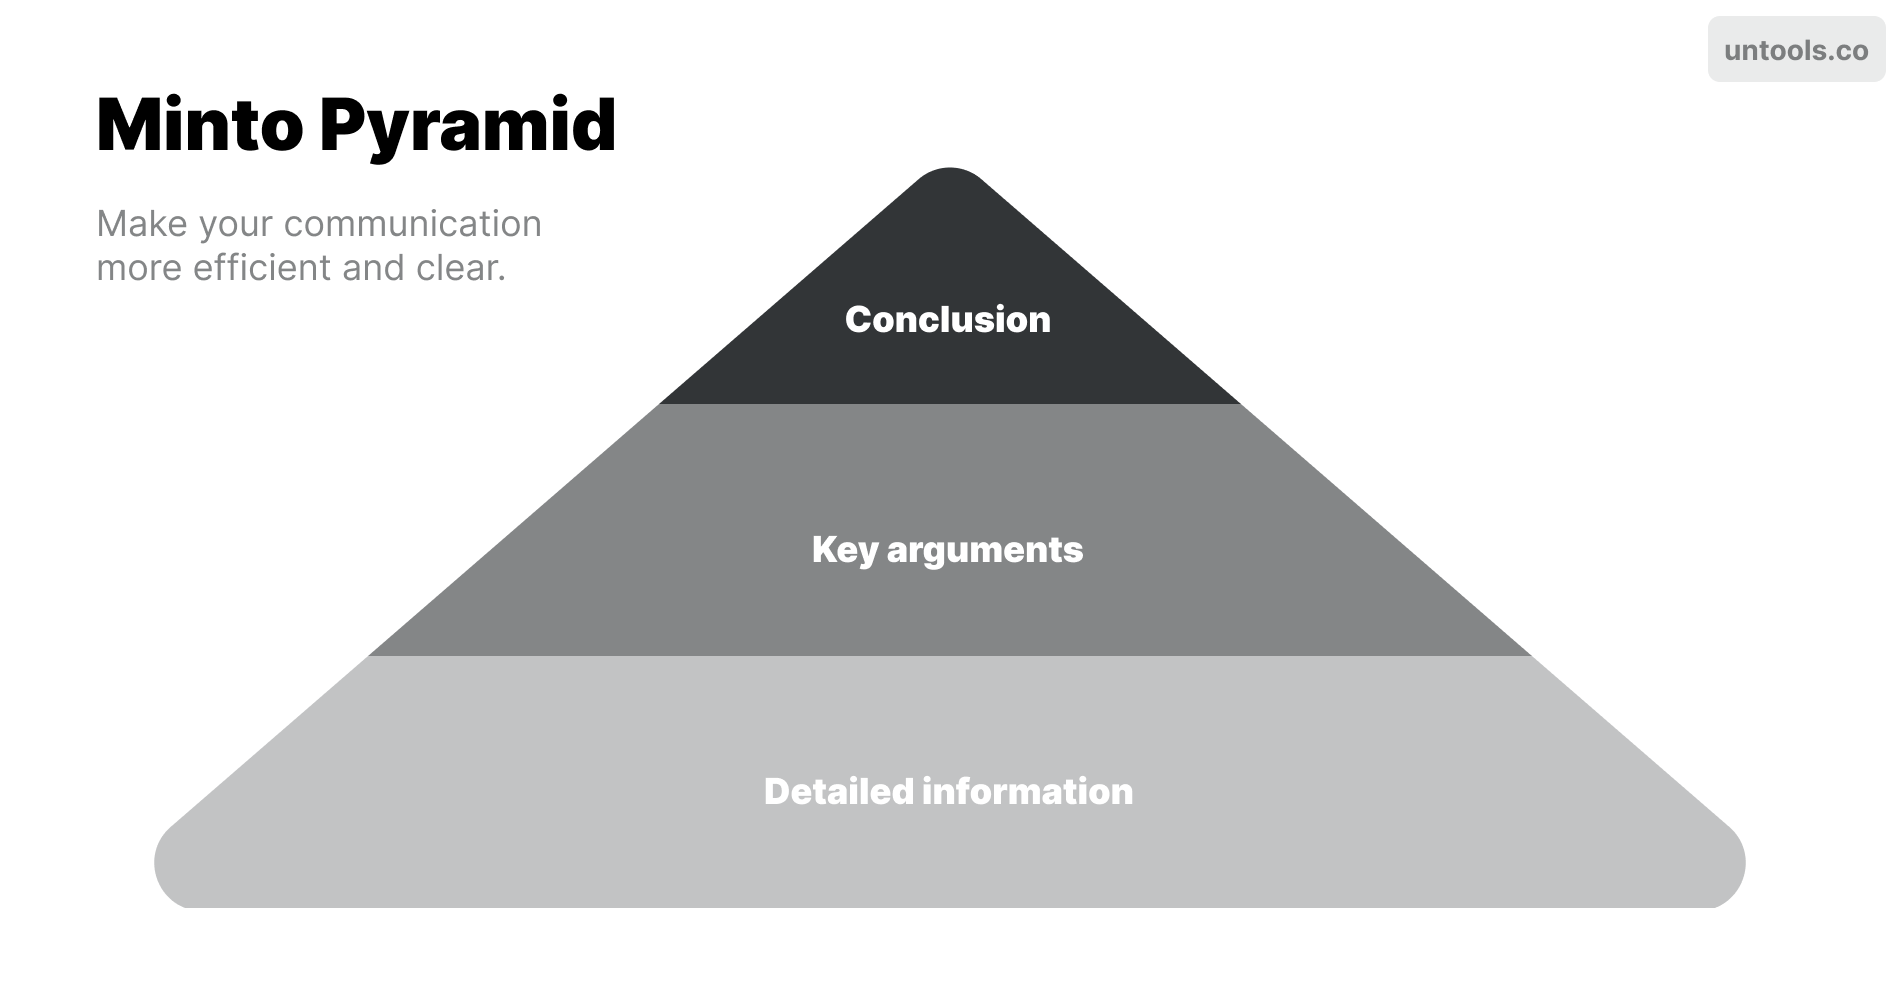 Minto Pyramid communication framework: Conclusion > Key arguments > Detailed information